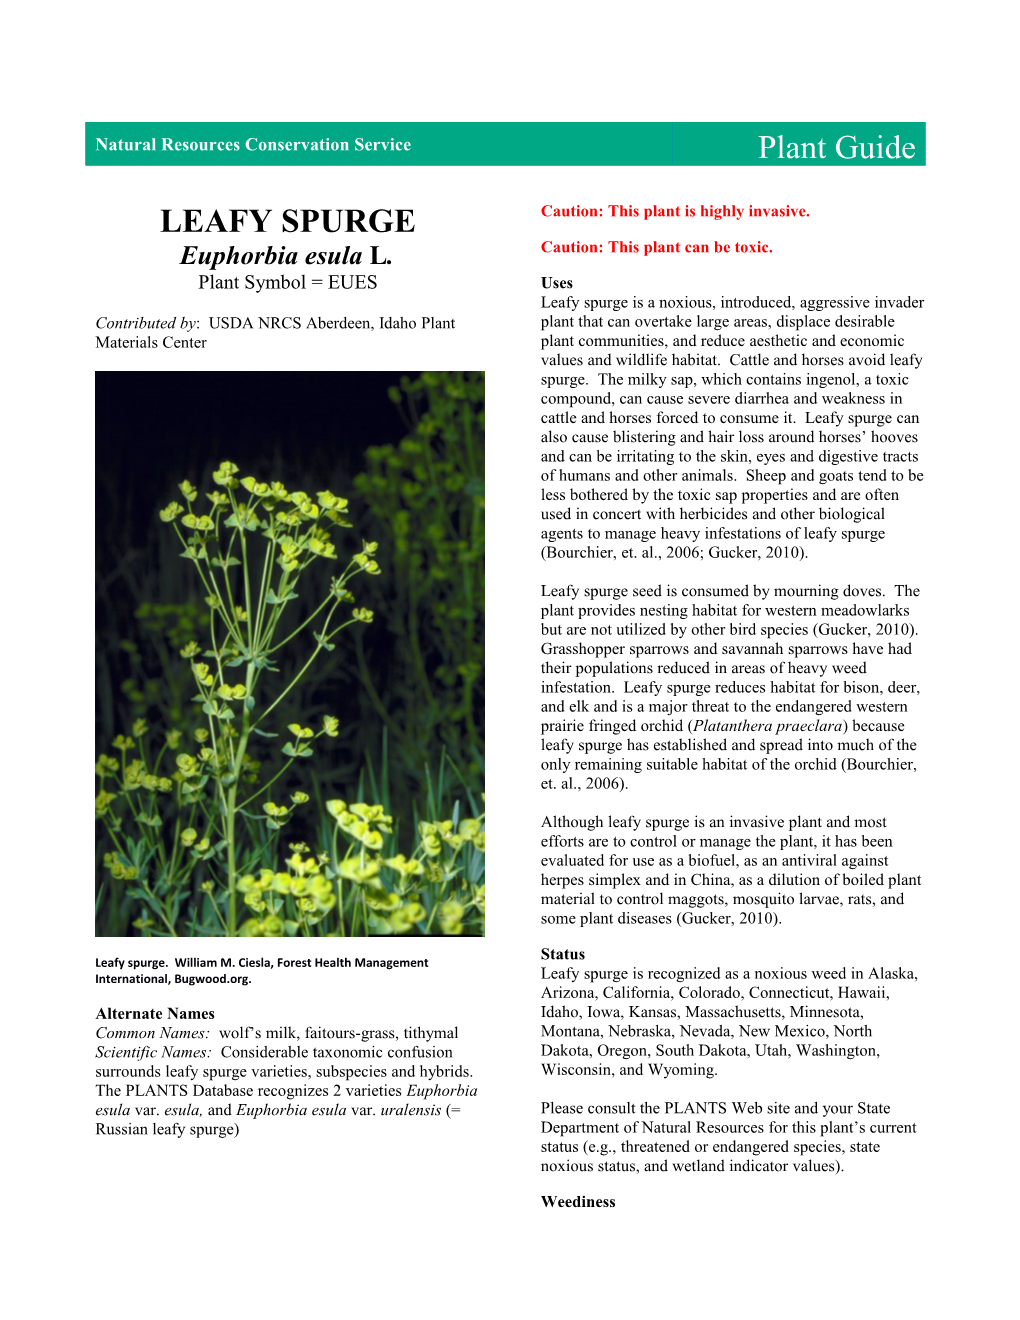 Plant Guide for Leafy Spurge (Euphorbia Esula)